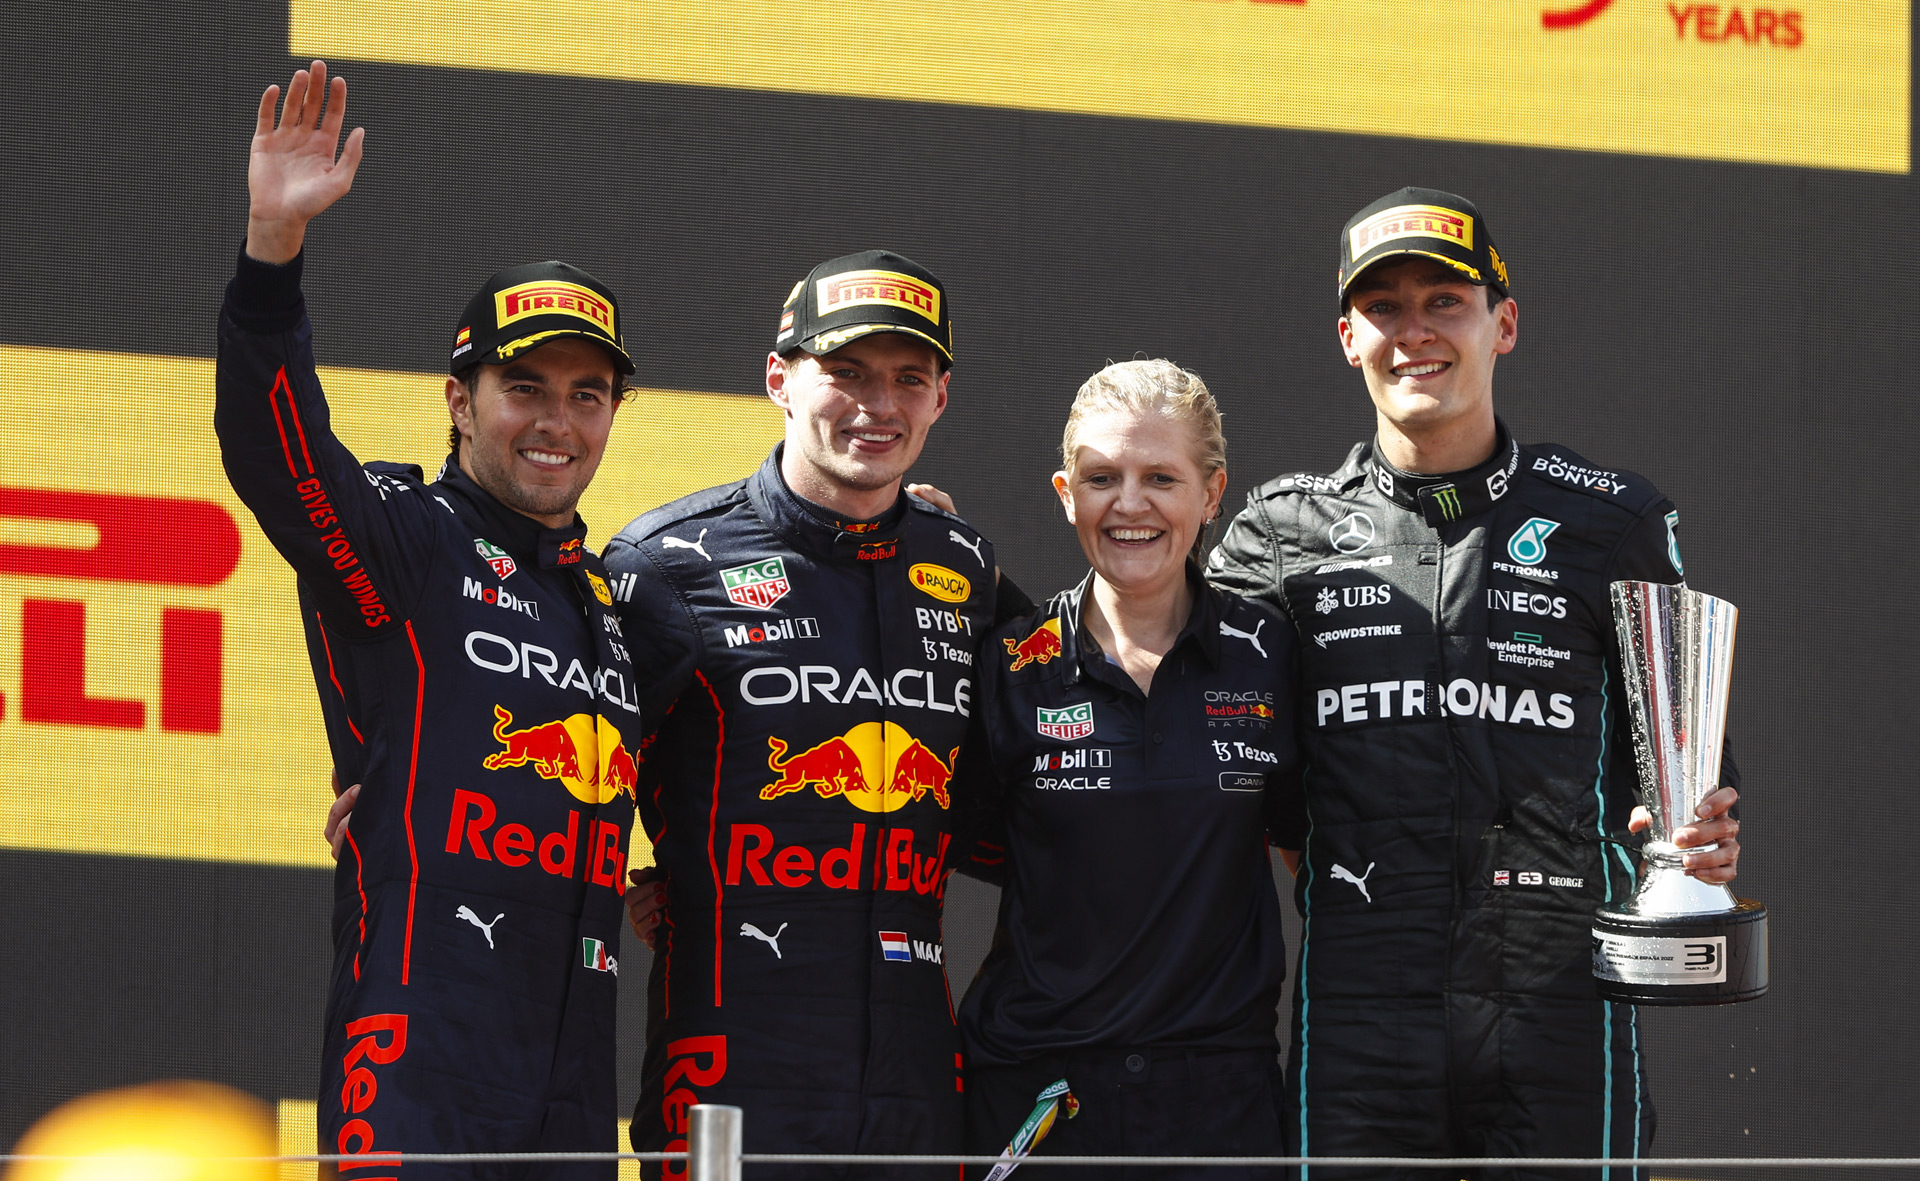 Red Bull 12 finish at F1 Spanish Grand Prix after Ferrari bad luck